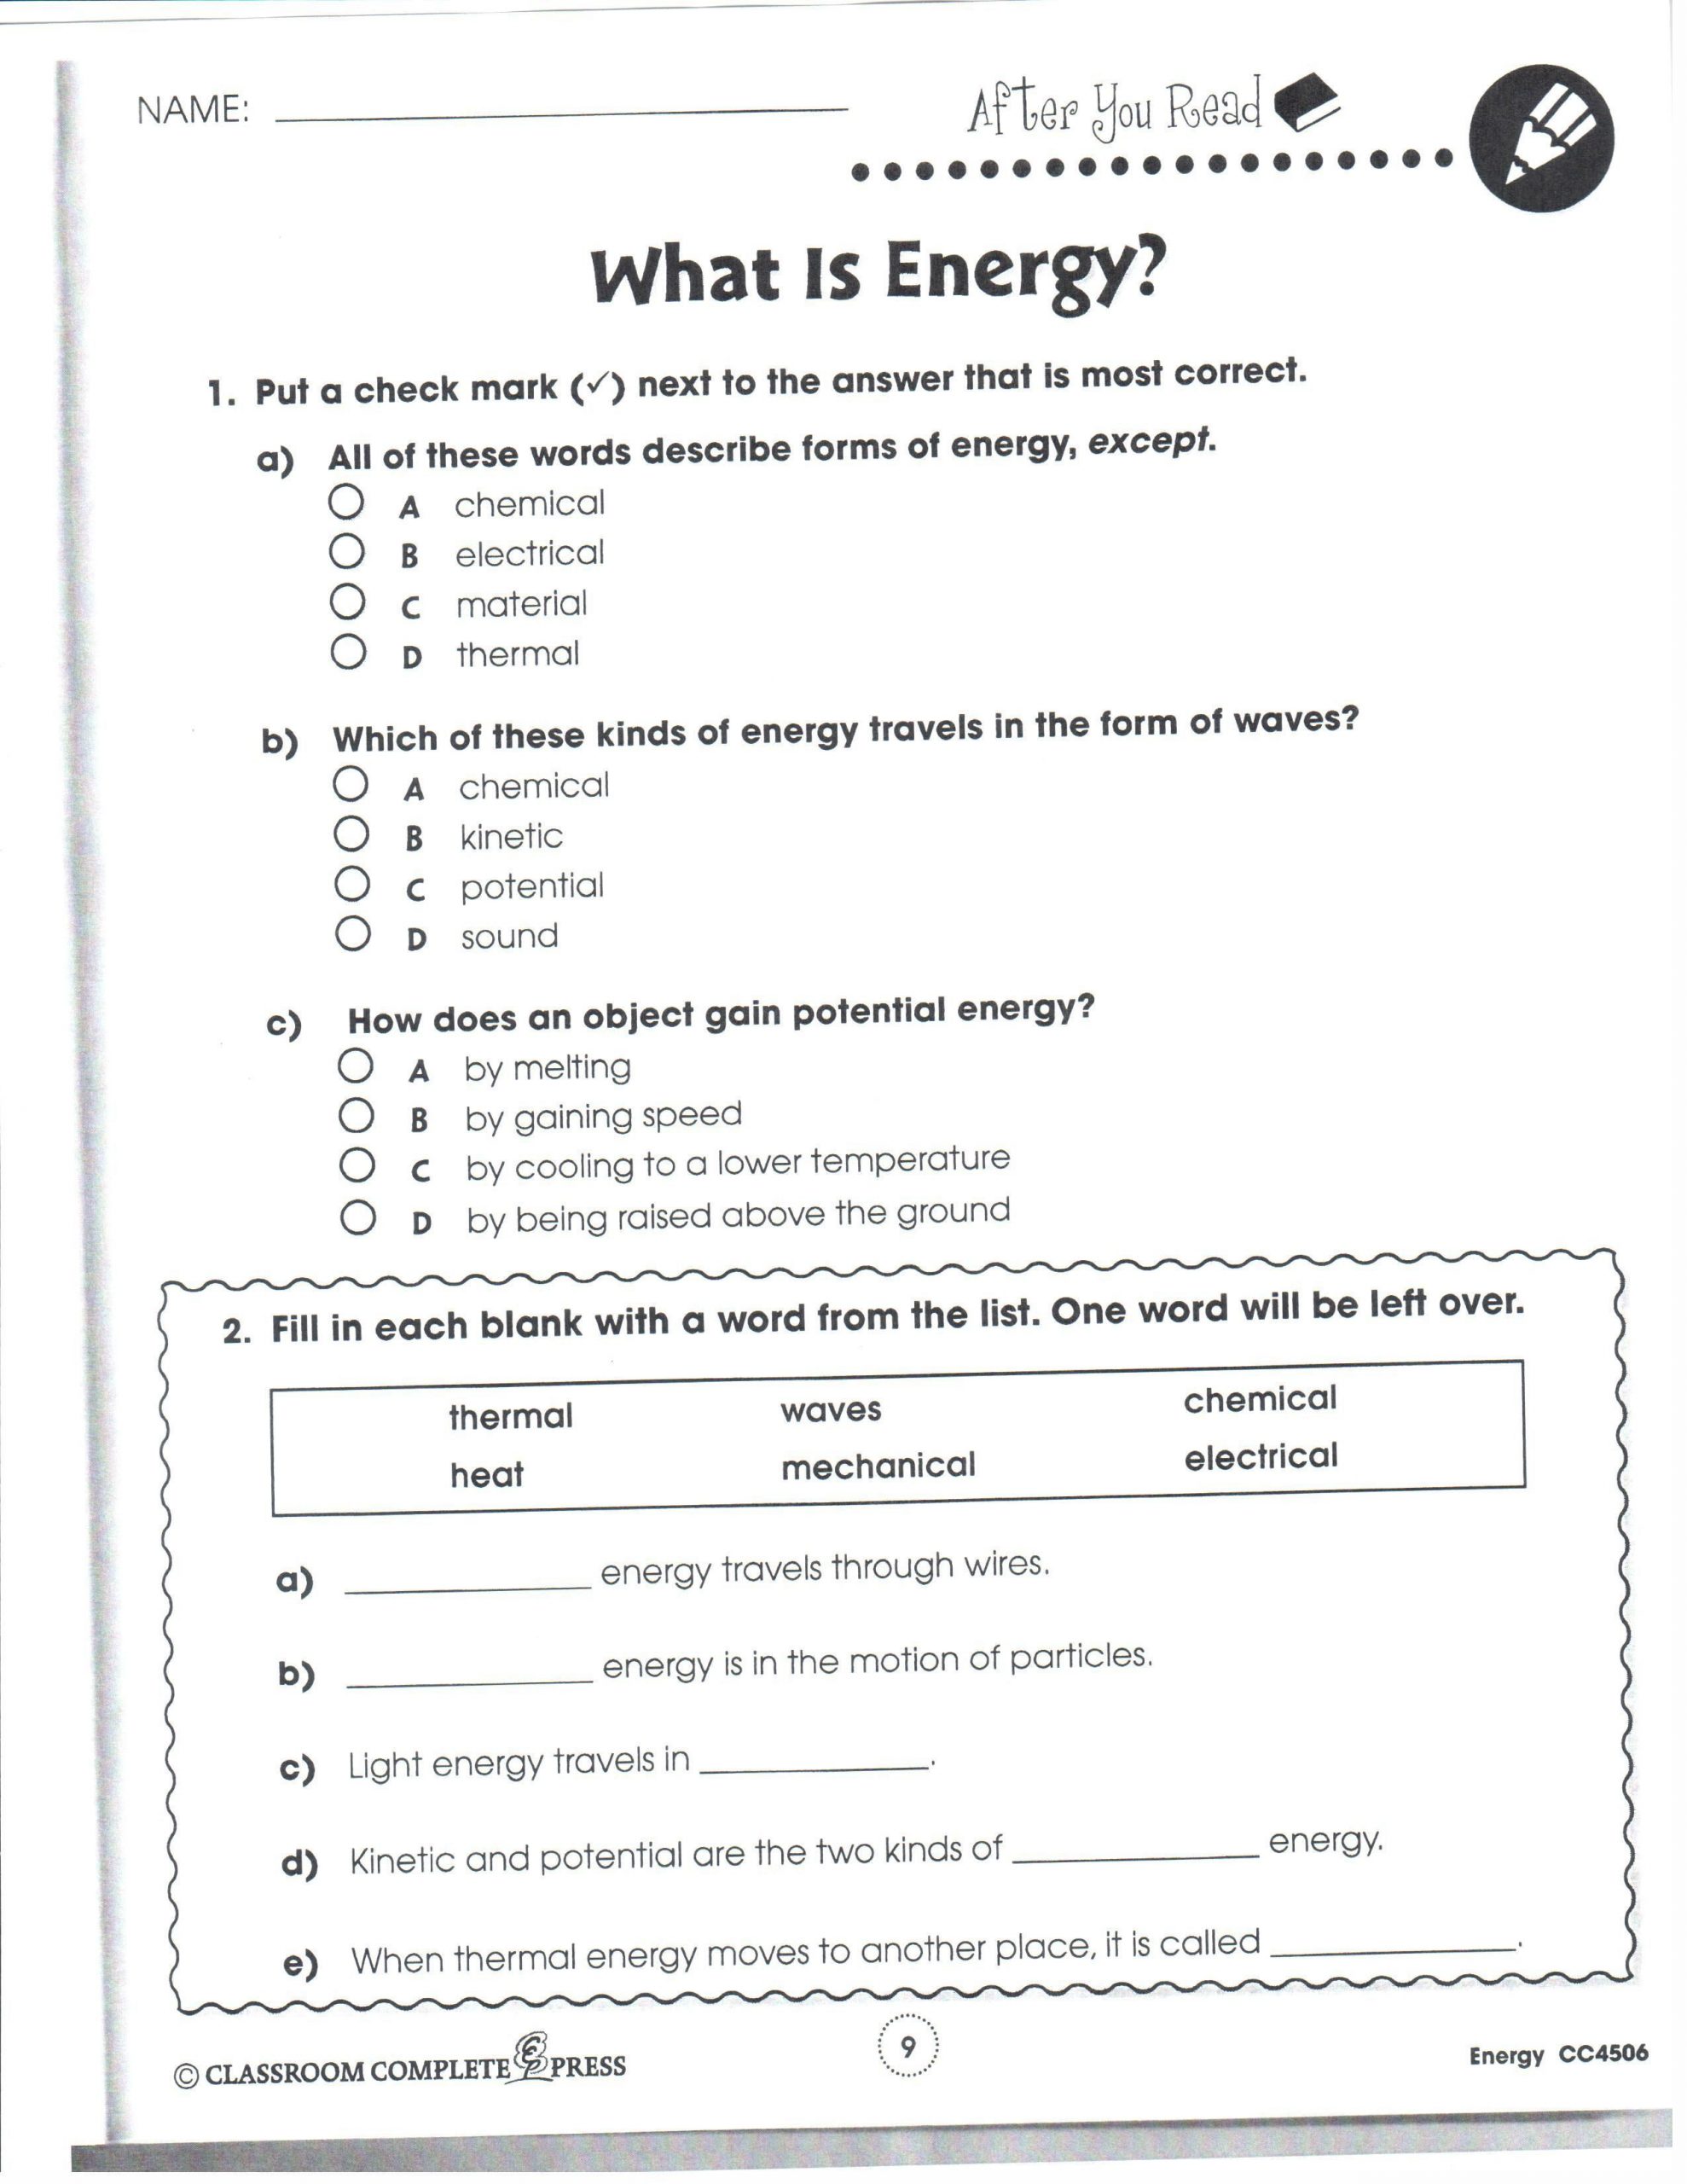 Energy Transformation Worksheet Pdf Linear Energy Transformation Worksheet Answers